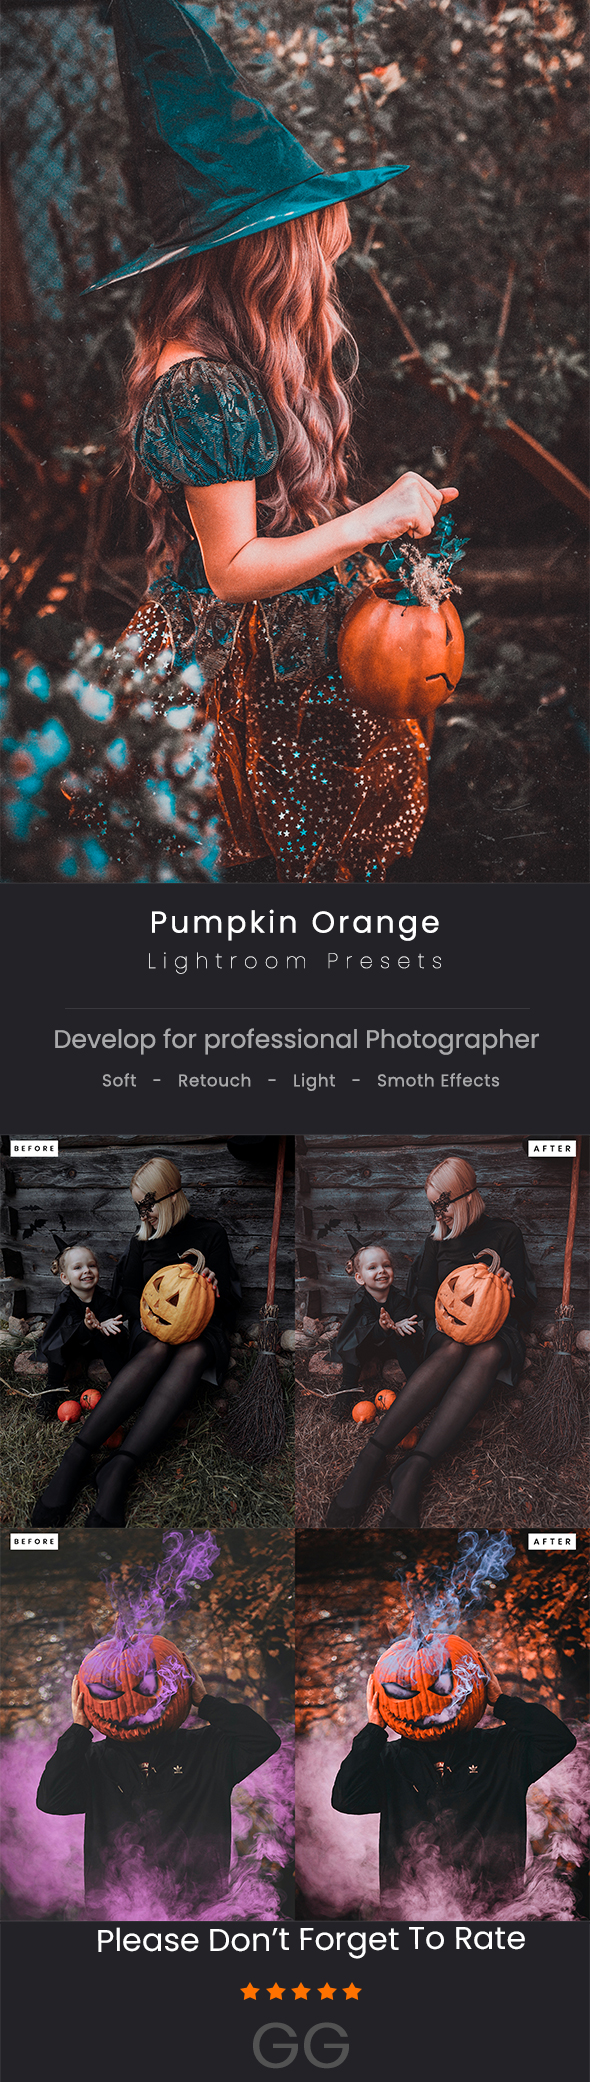 Pumpkin Orange Lightroom Presets